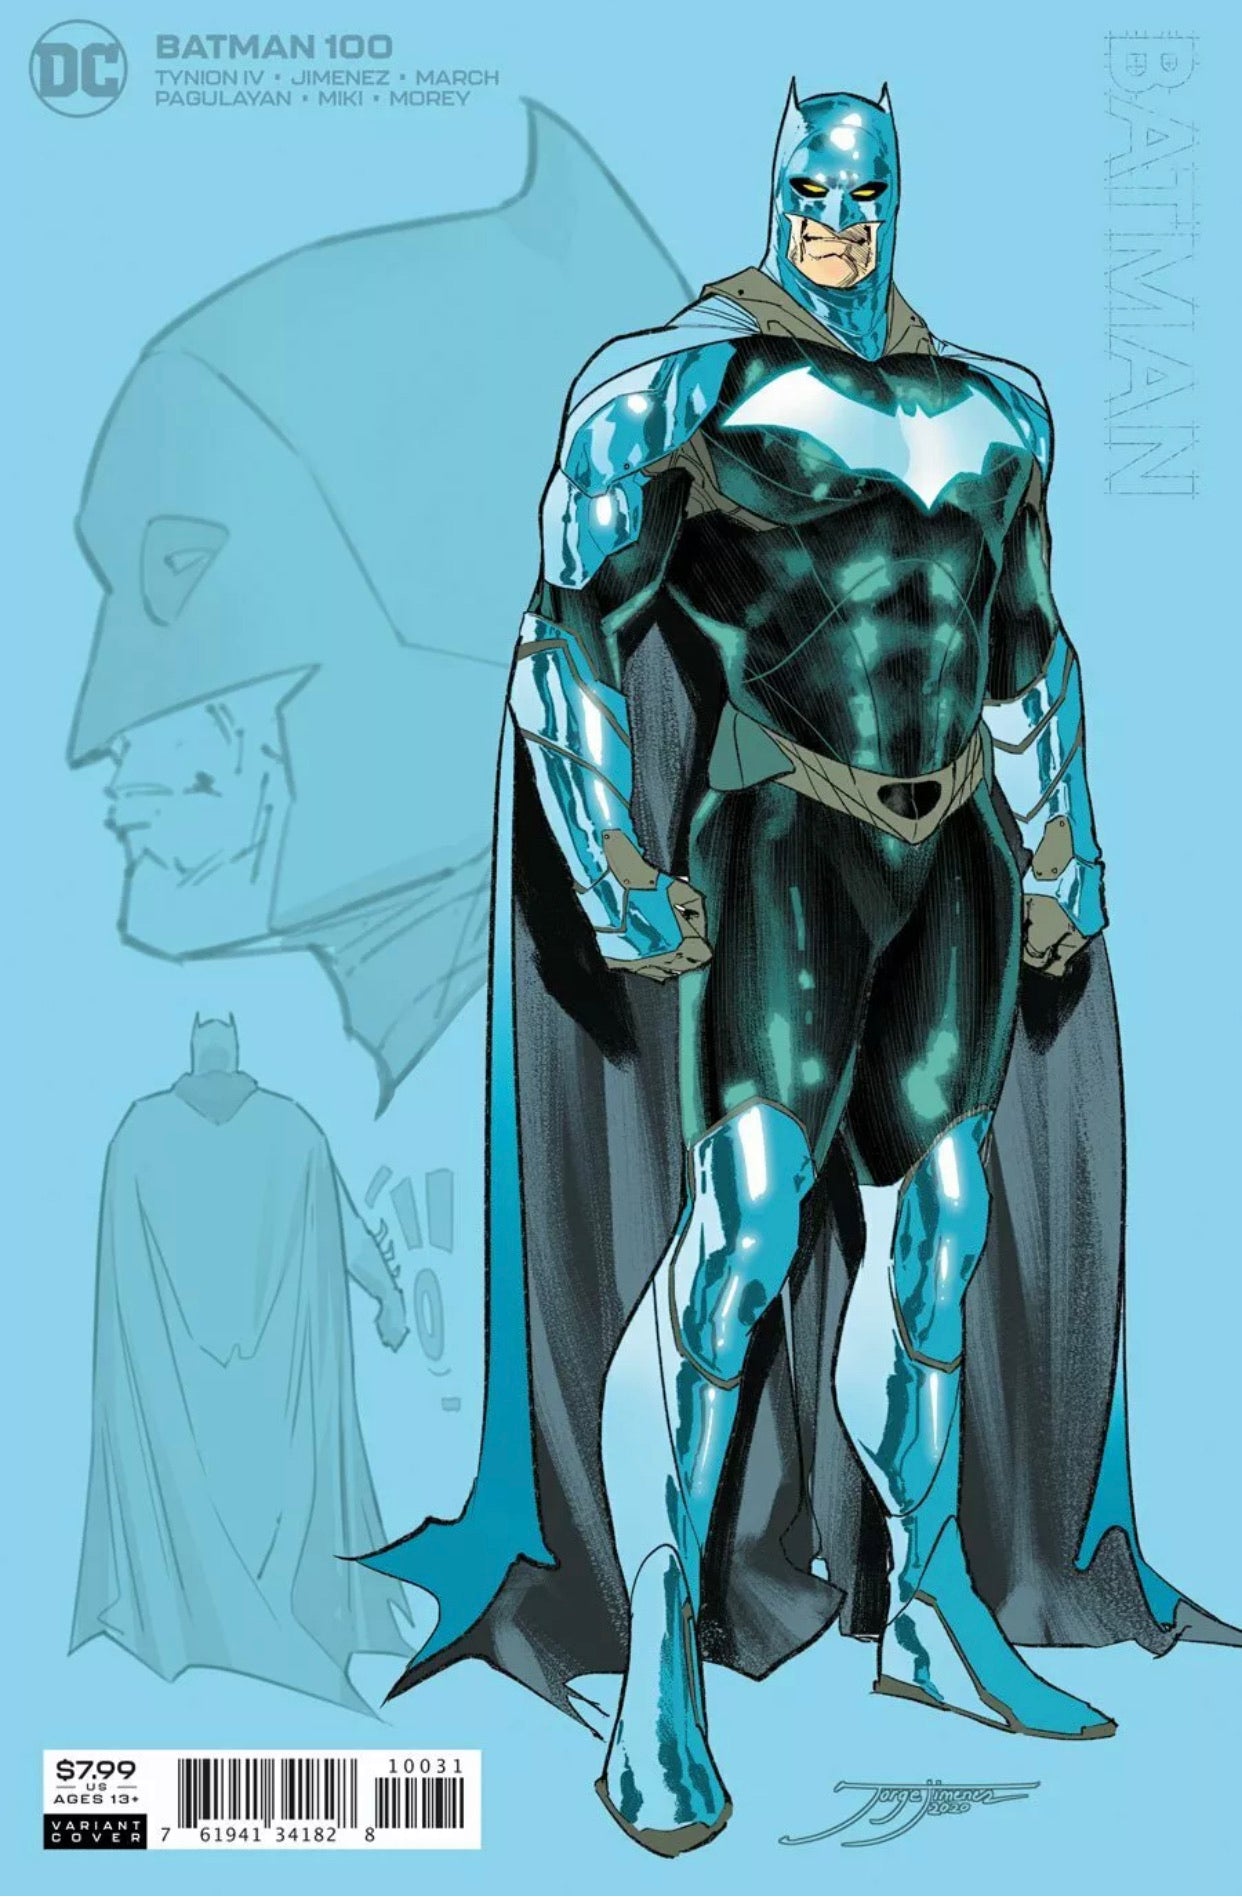 BATMAN #100 JORGE JIMENEZ 1:25 Ratio Variant Ghost-Maker Joker War